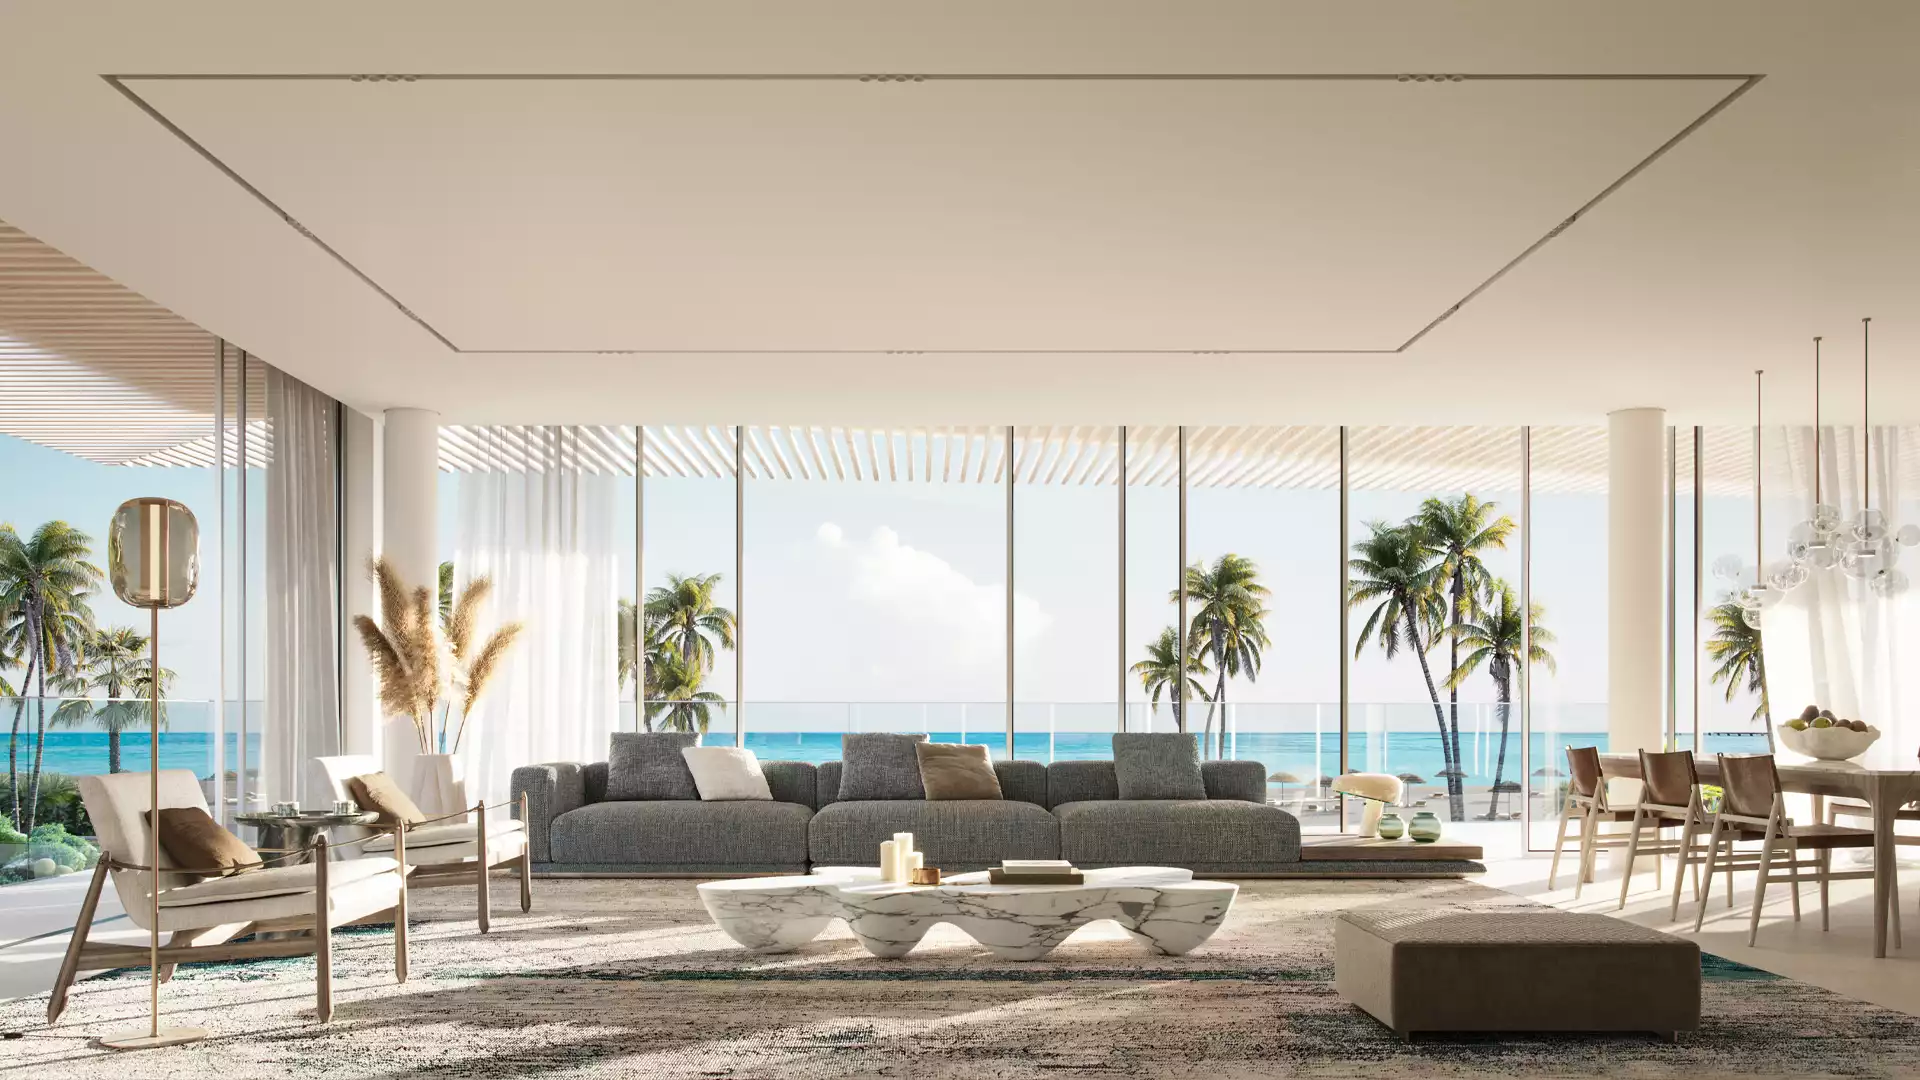 Edge-Realty-شقة فاخرة غرفتين نوم للبيع في مشروع ريكسوس ريزيدنس بجزر دبي